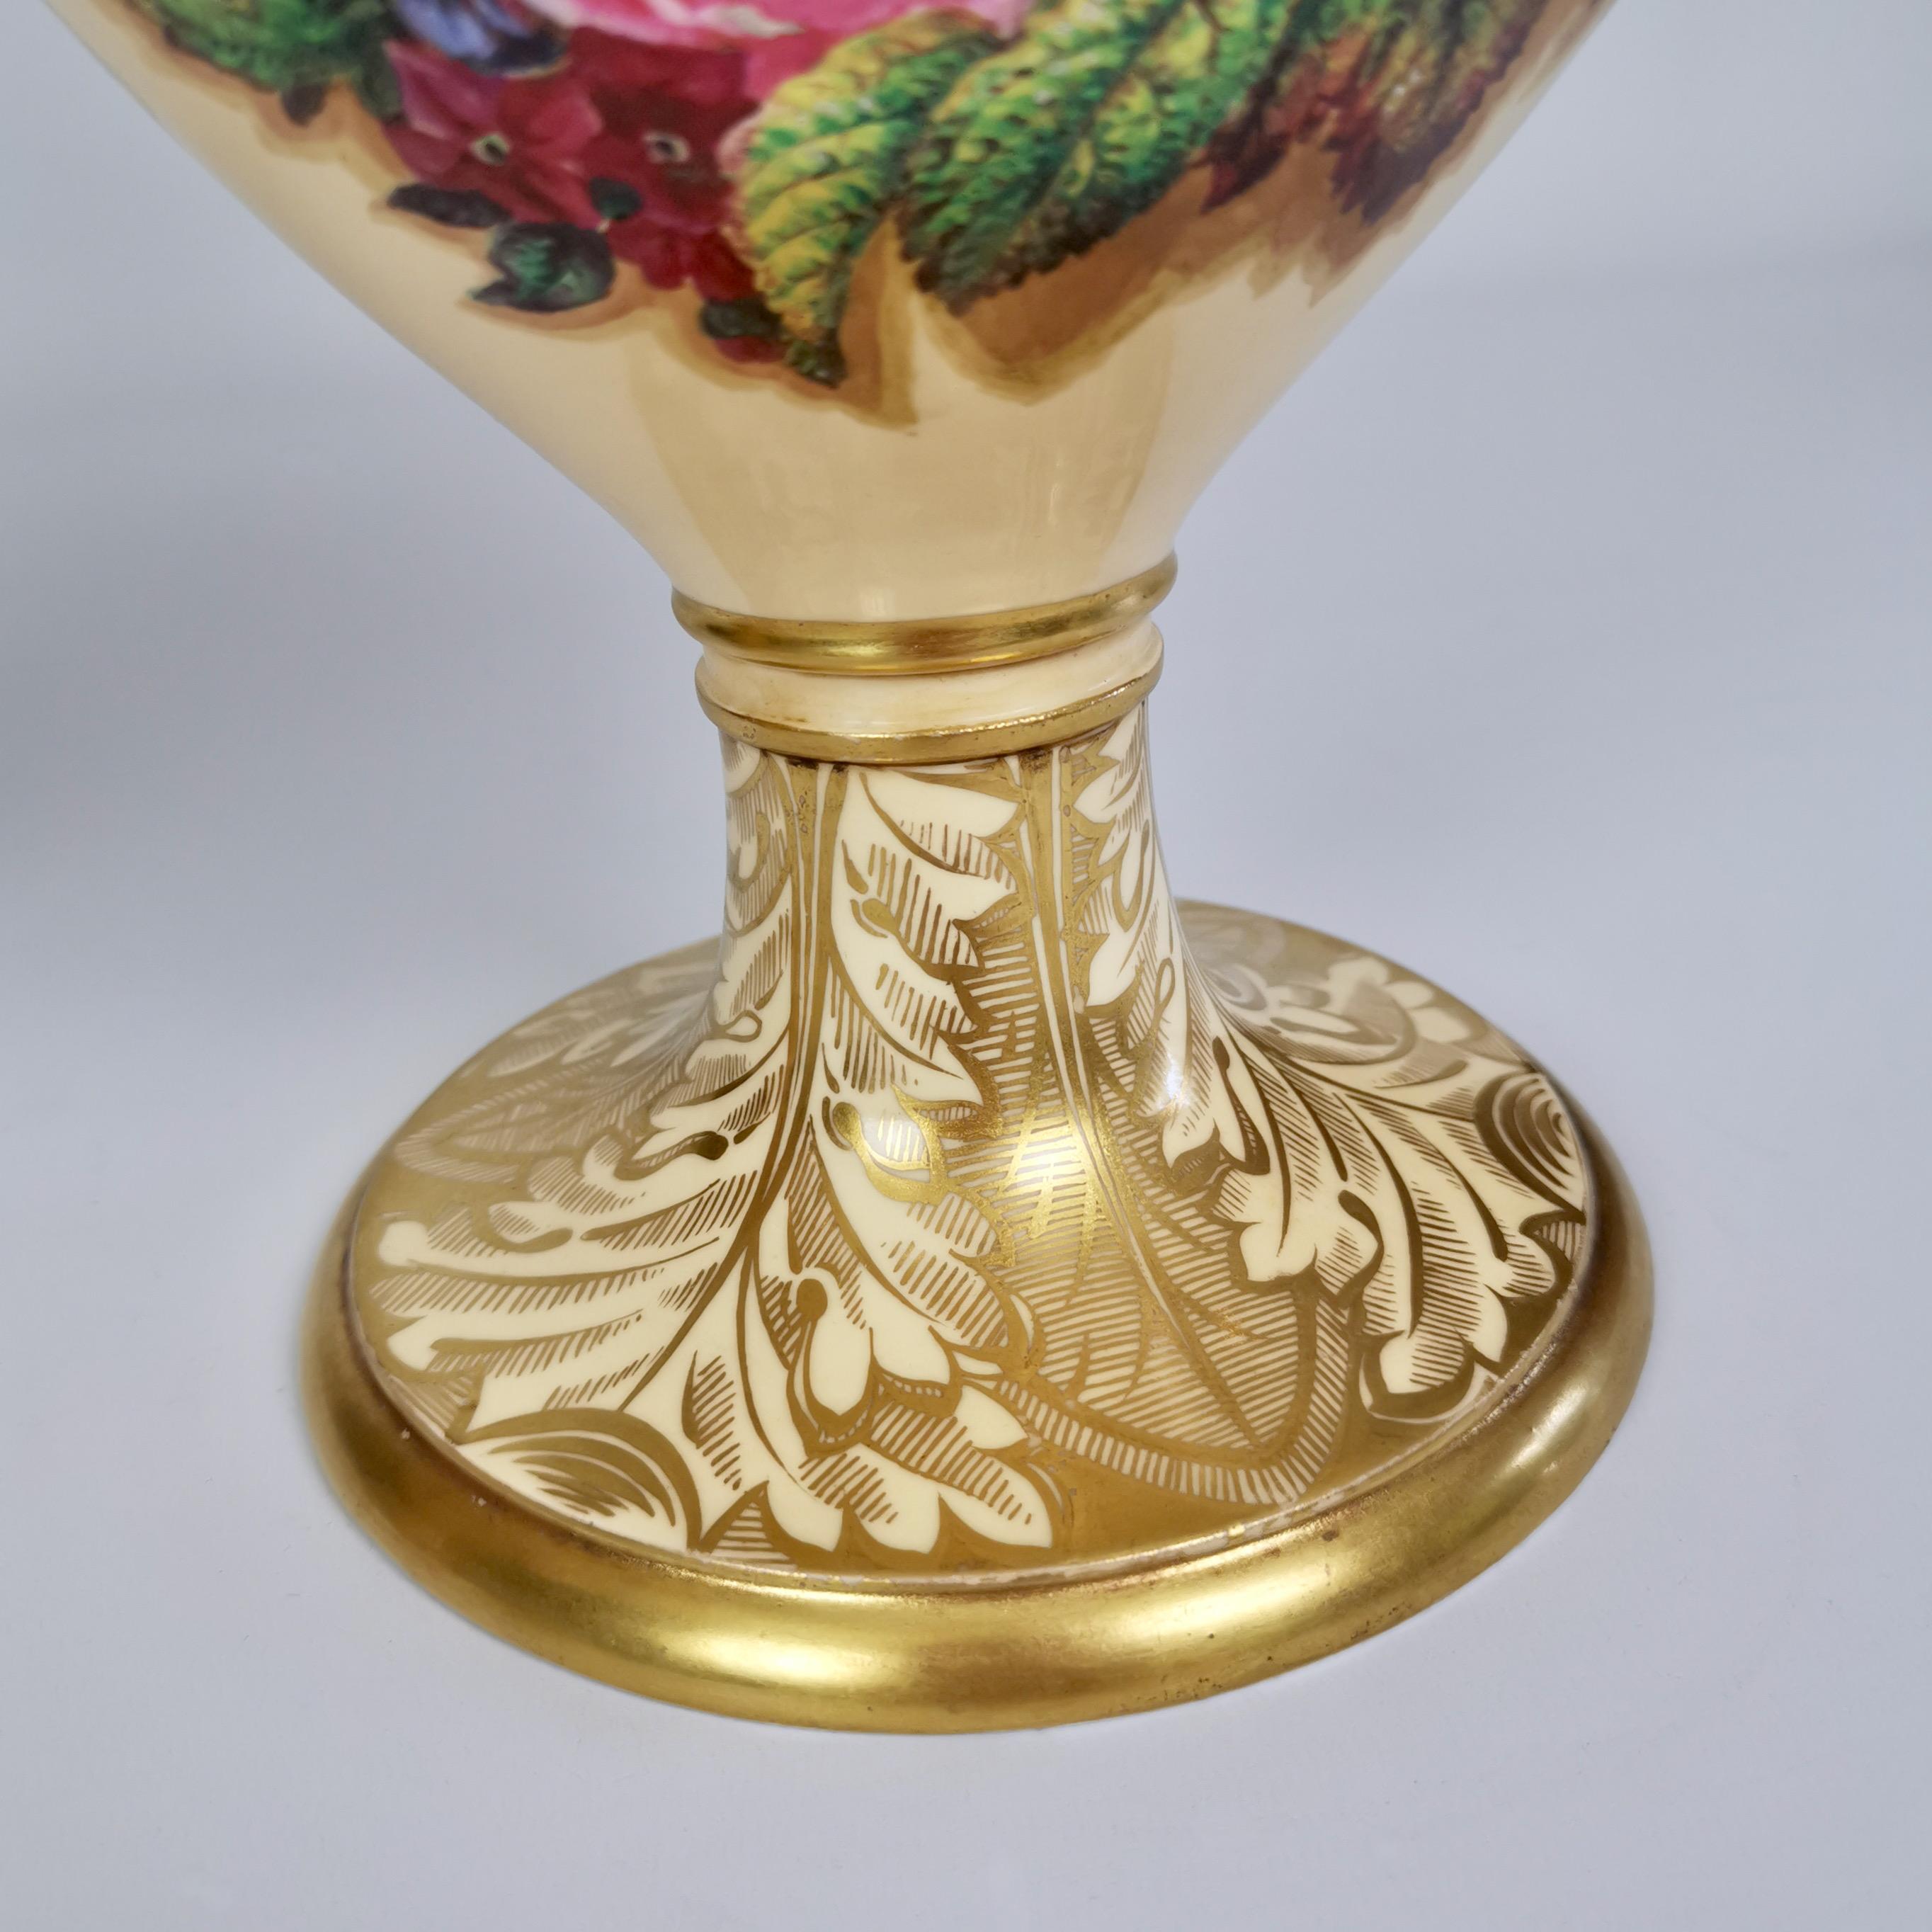 Copeland & Garrett Porcelain Vases, Flowers and Fruits, Rococo Revival 1833-1847 7